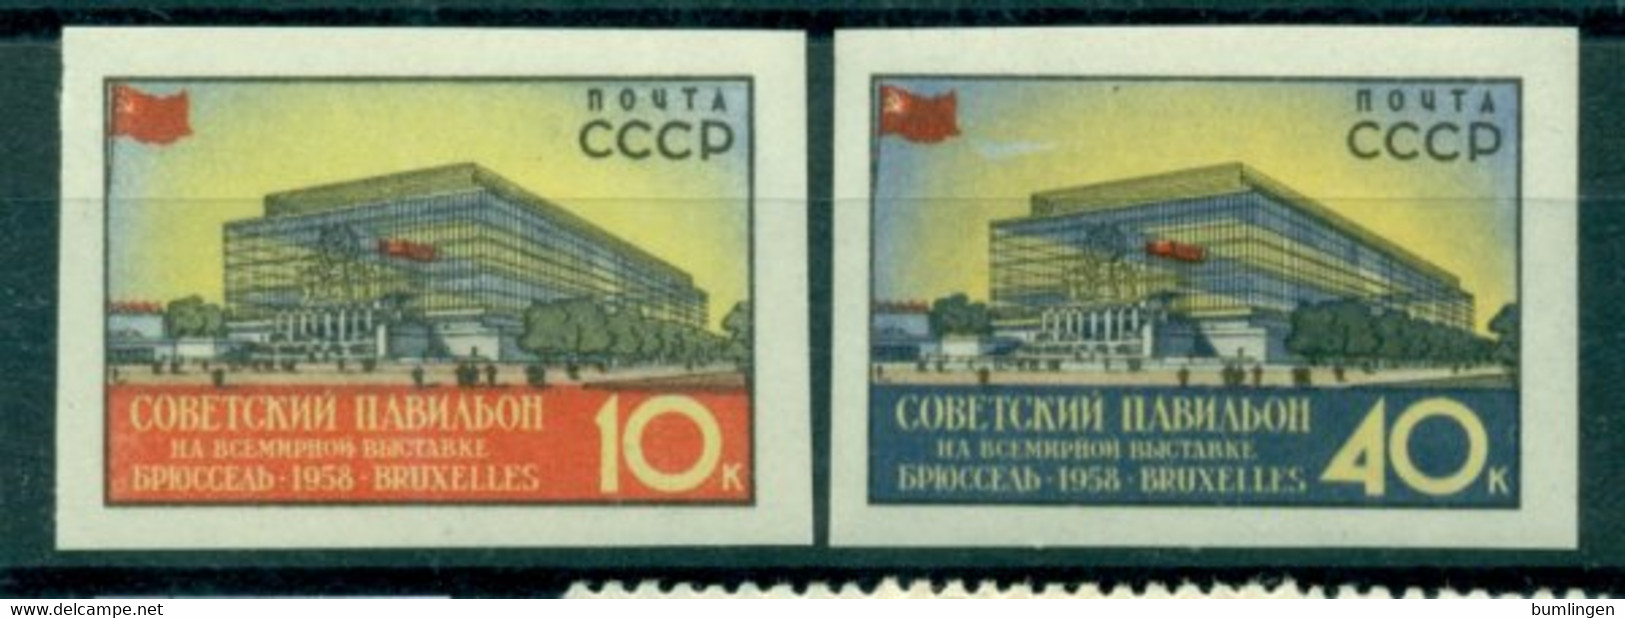 SOVIET UNION 1958 Mi 2068-69B** World Expo, Brussels [L2517] - 1958 – Brussels (Belgium)